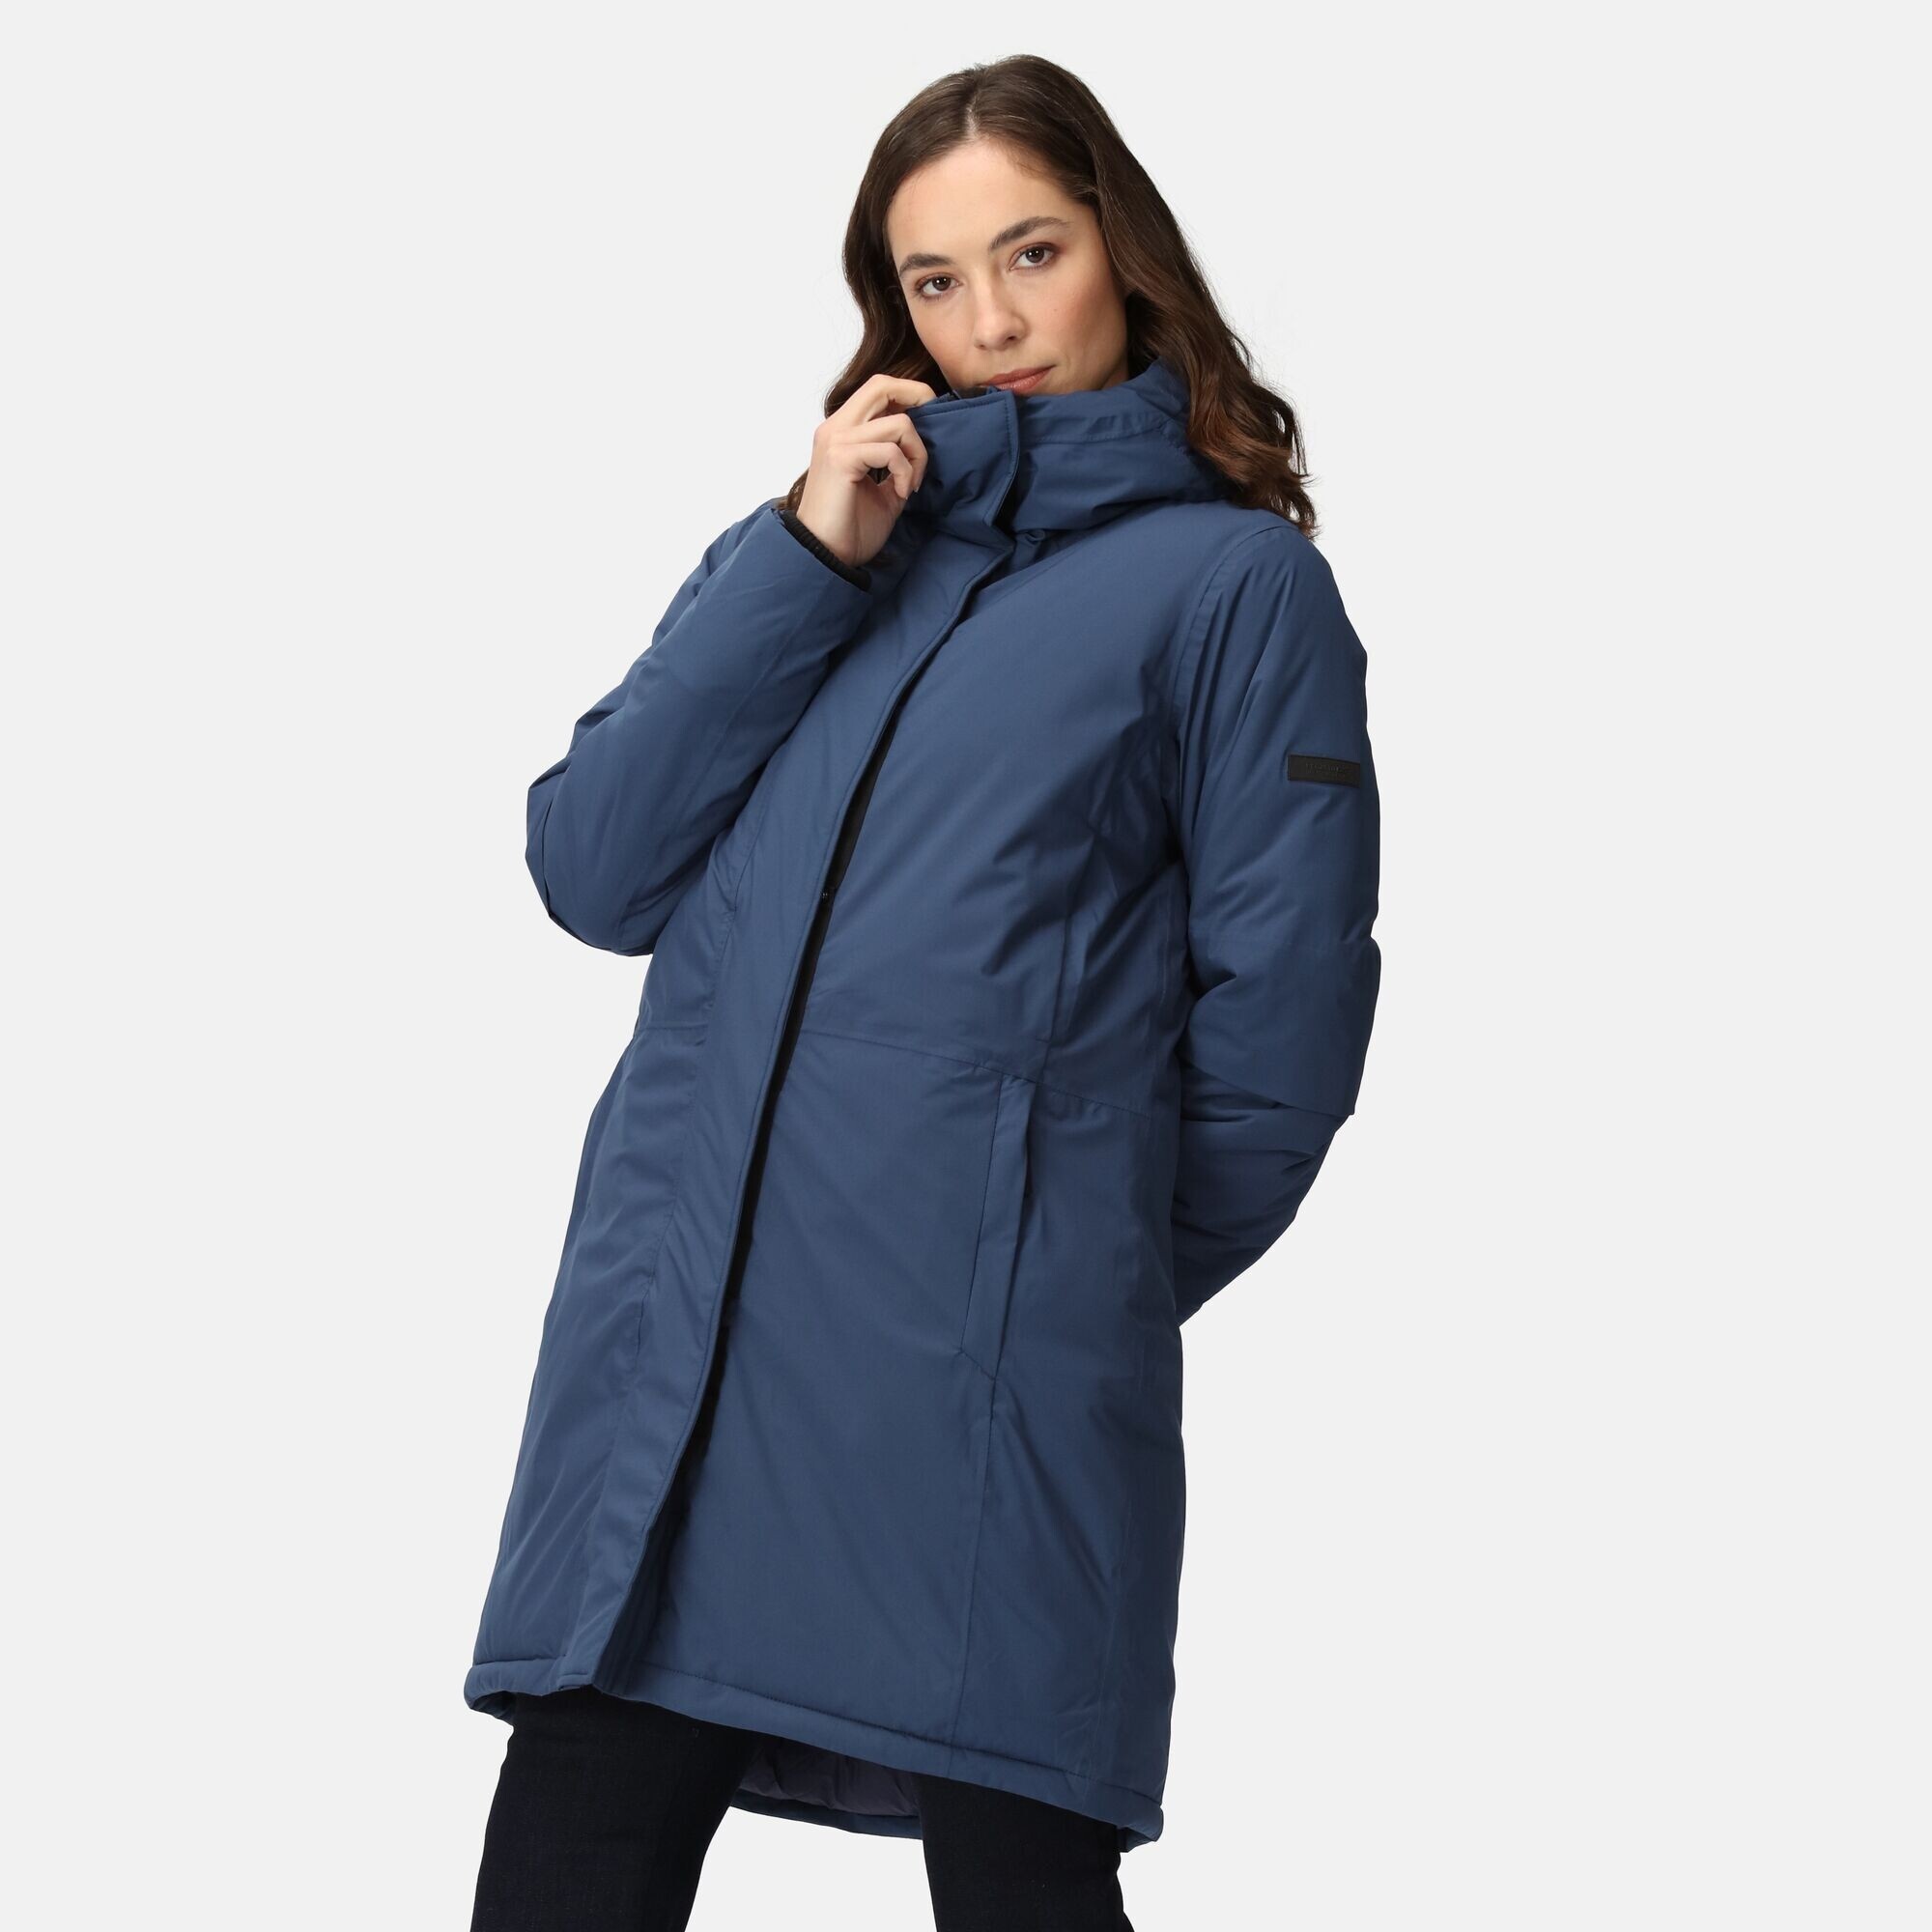 Dámský zimní kabát Yewbank III RWP384-VD4 modrý - Regatta 34